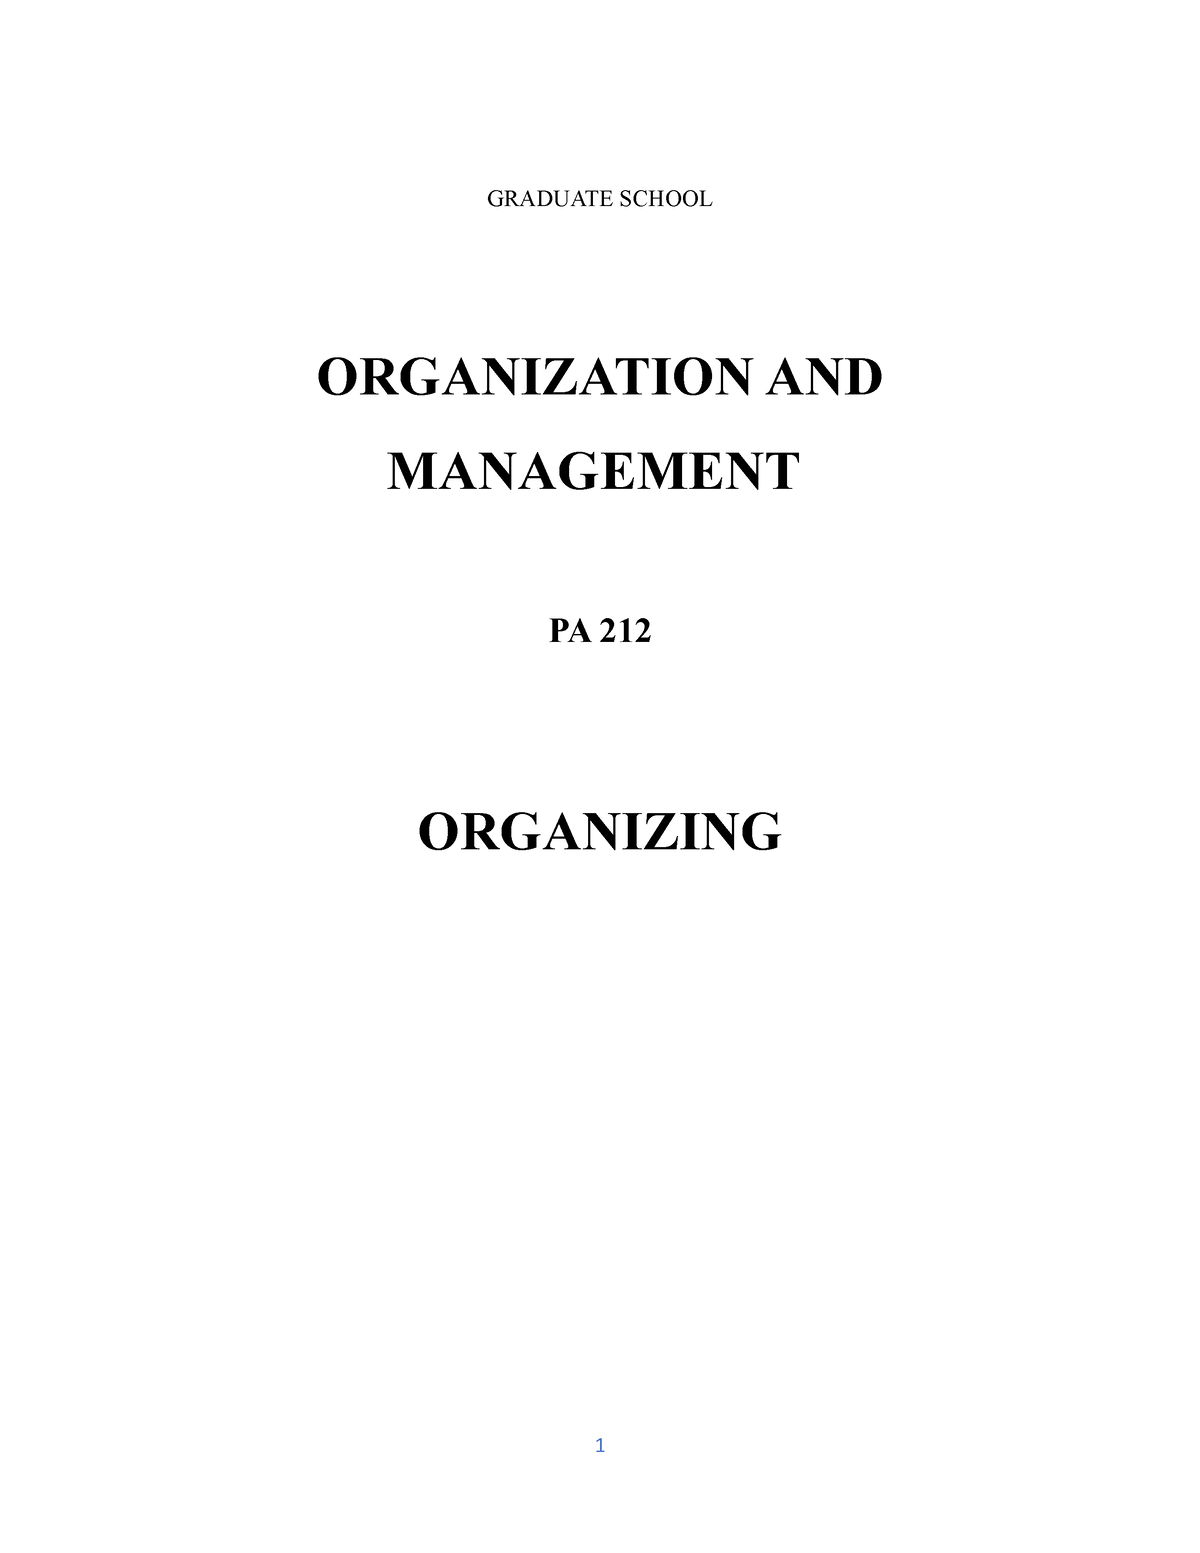 Function of Management Organizing Evaluation/Assessment.. - GRADUATE ...